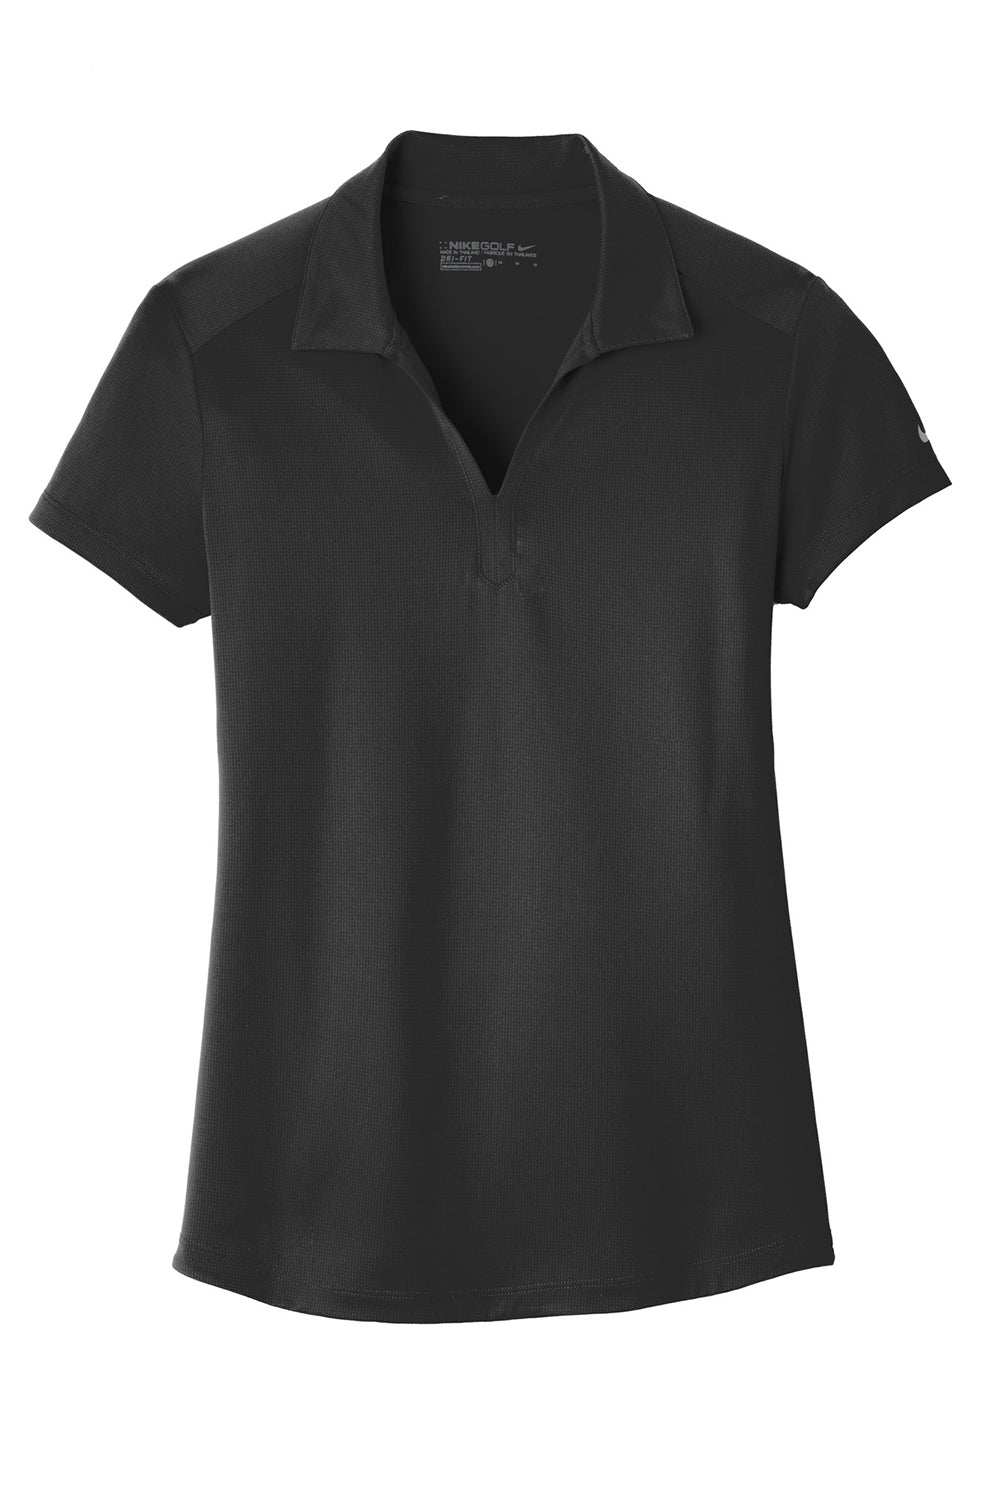 Nike 838957 Womens Legacy Dri-Fit Moisture Wicking Short Sleeve Polo Shirt Black Flat Front